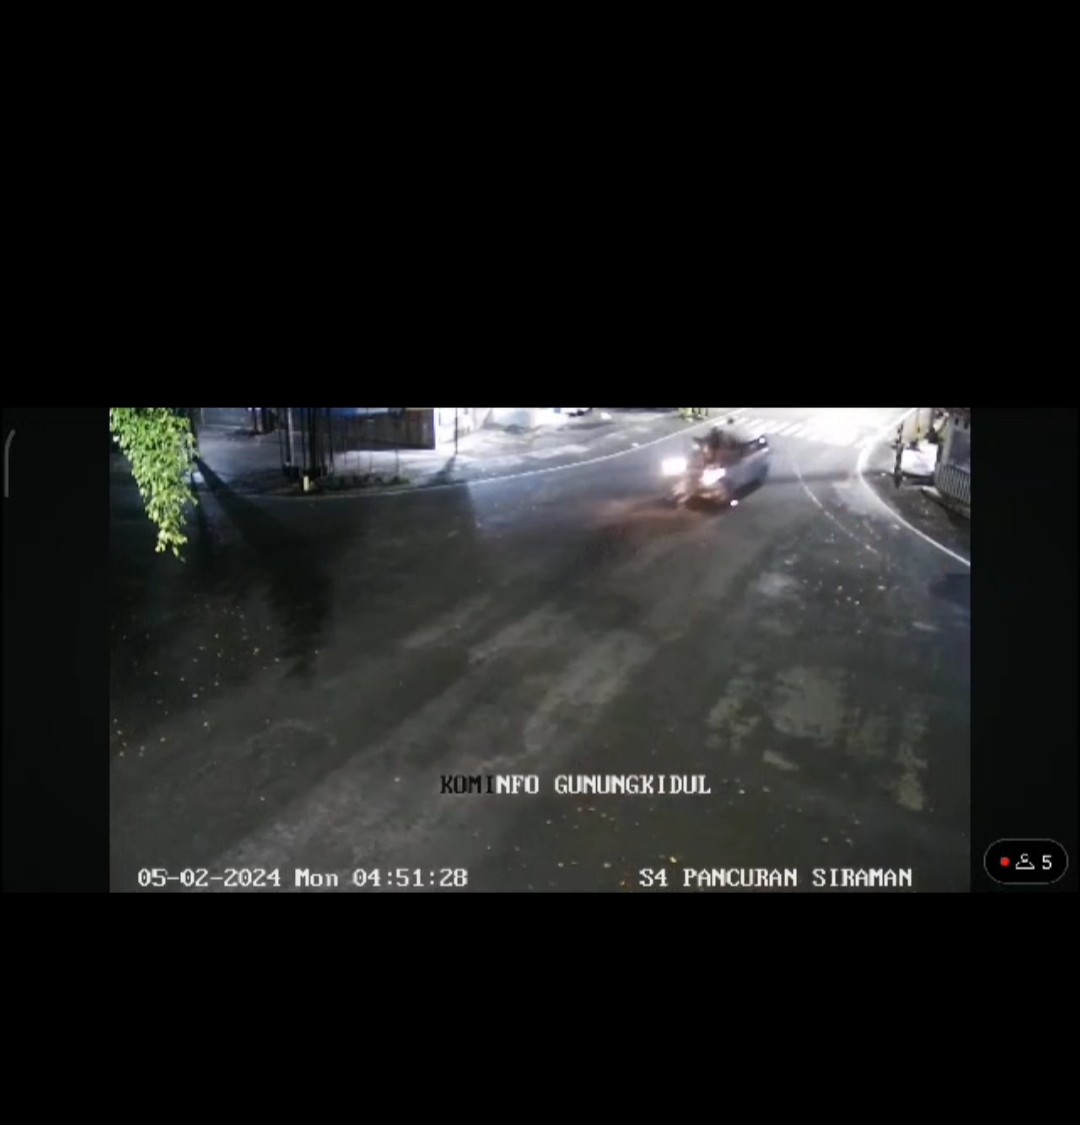 Rekaman CCTV Detik Detik Kecelakaan